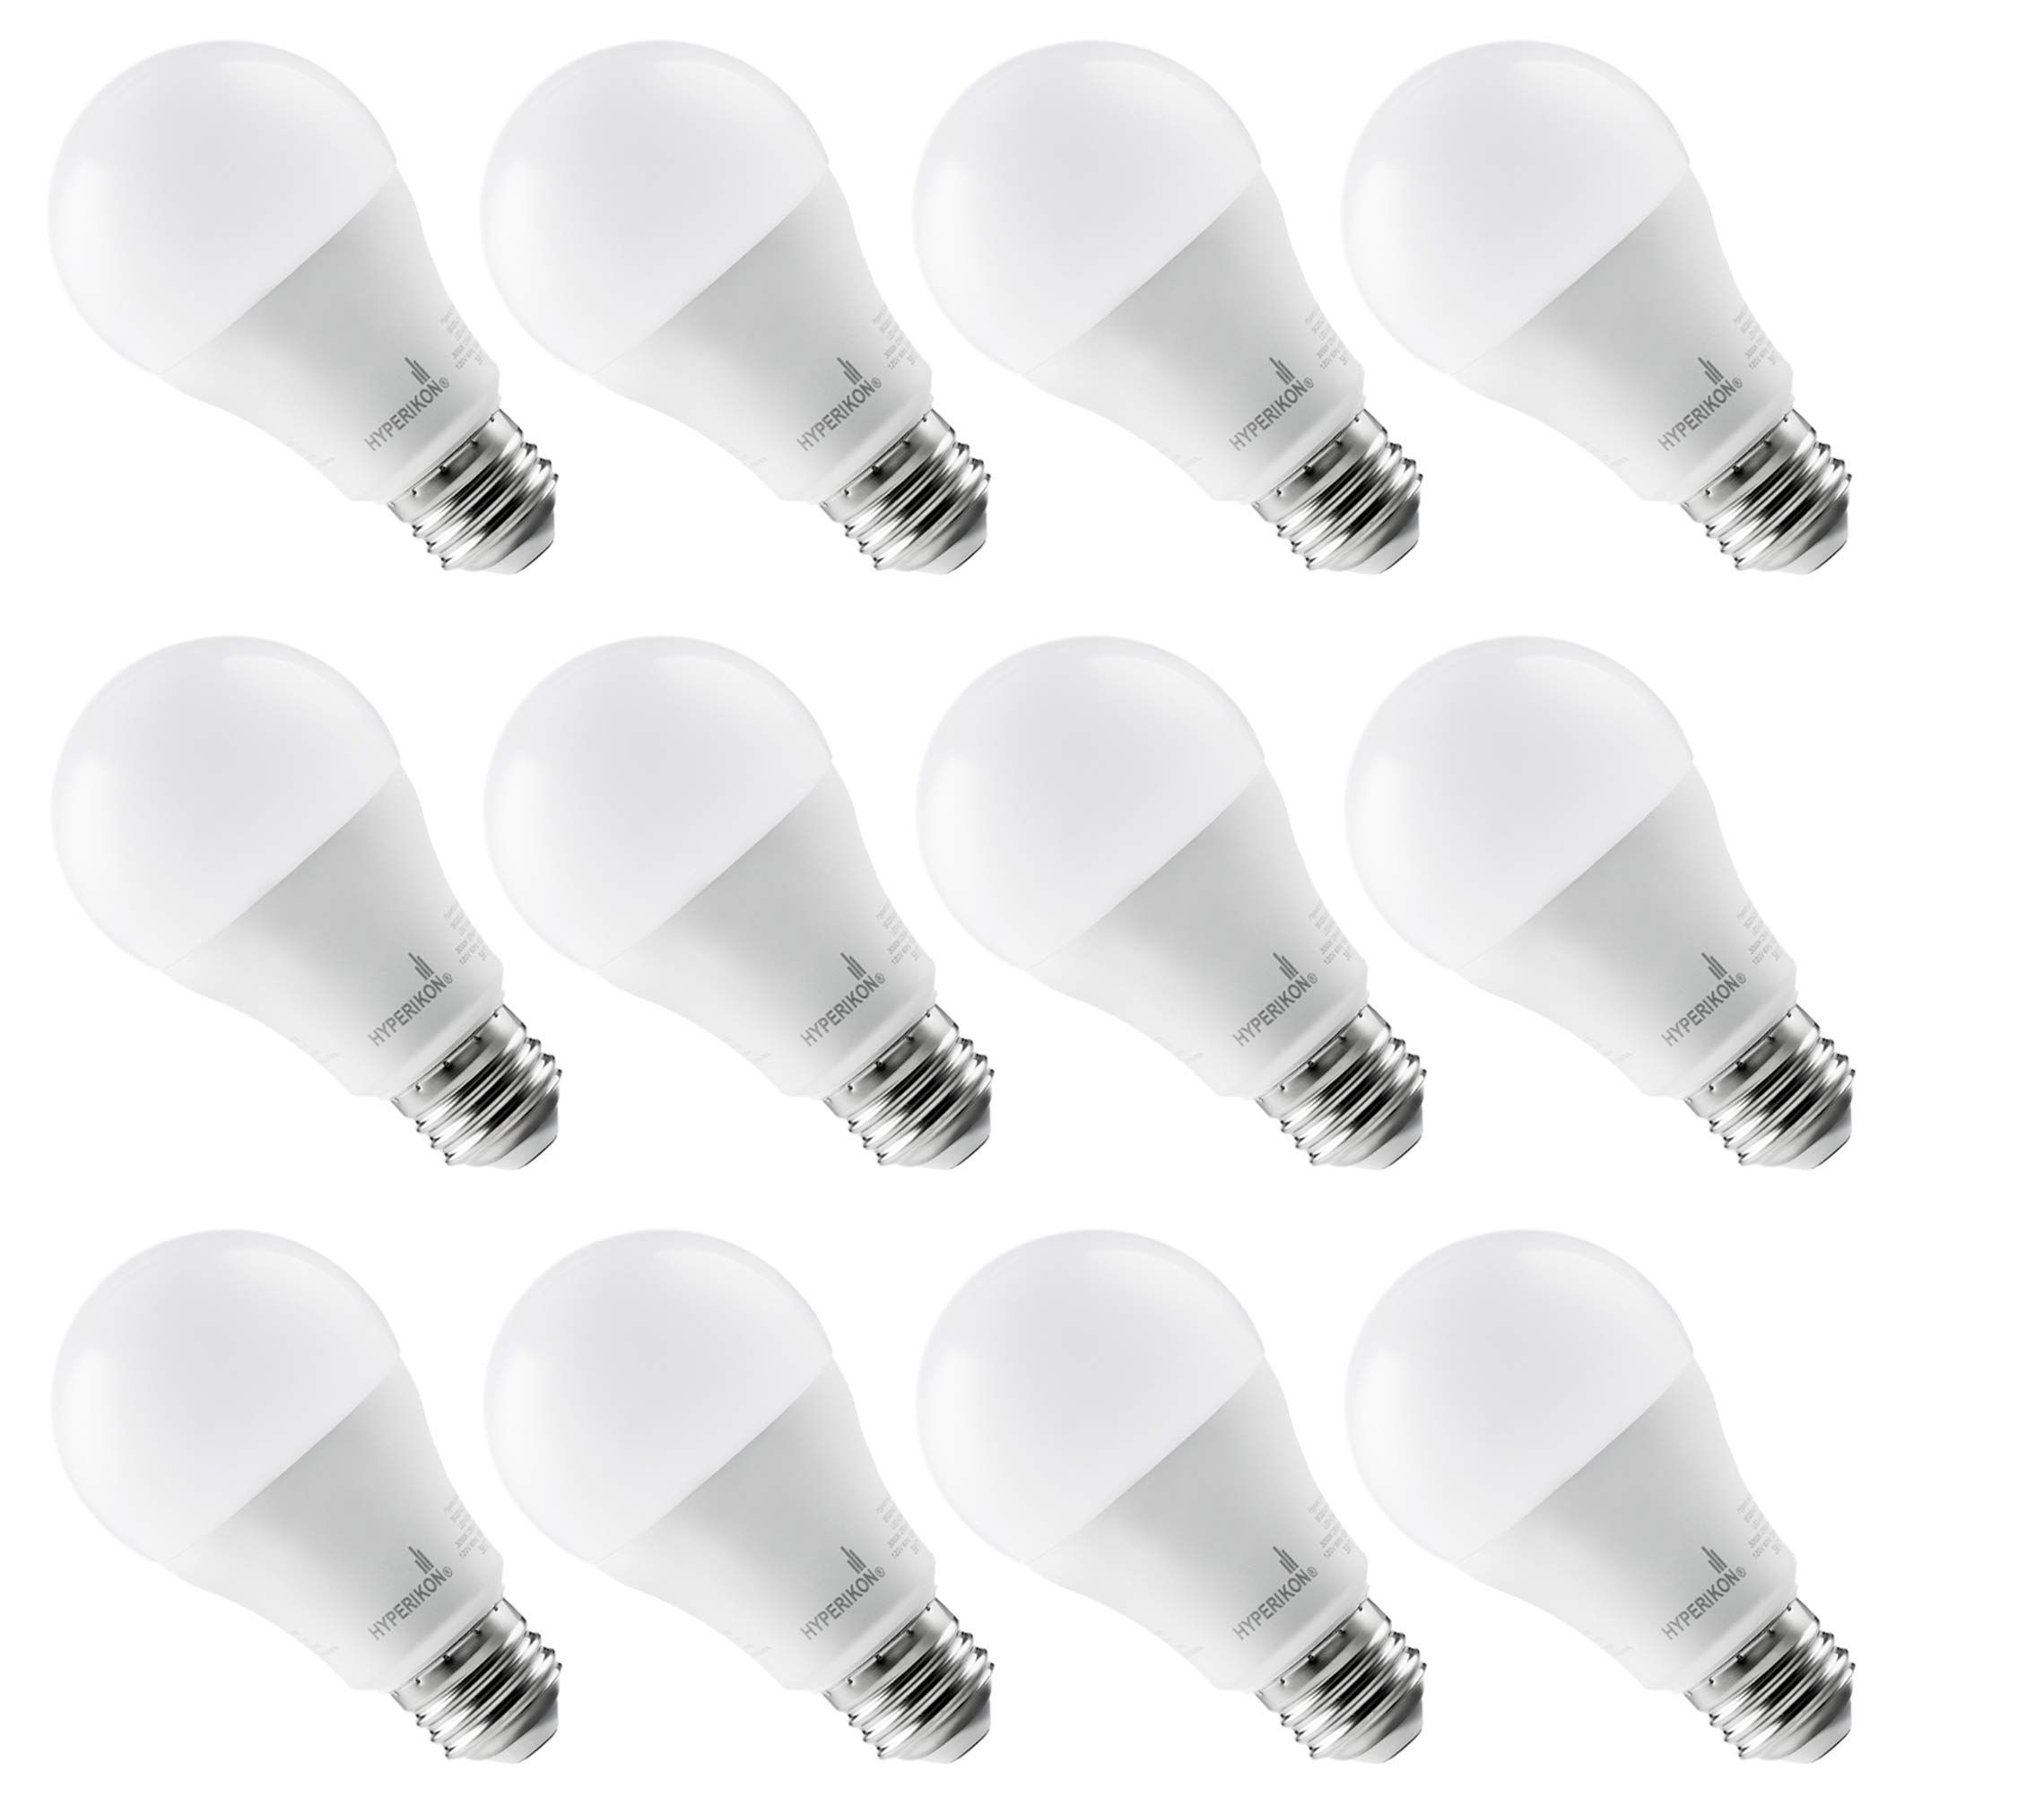 LED 14W Bulbs Hyperikon LED A19 Dimmable Bulb 100W Equivalent 12 Pack Inc HyperA19-14W40 Daylight 4000K 